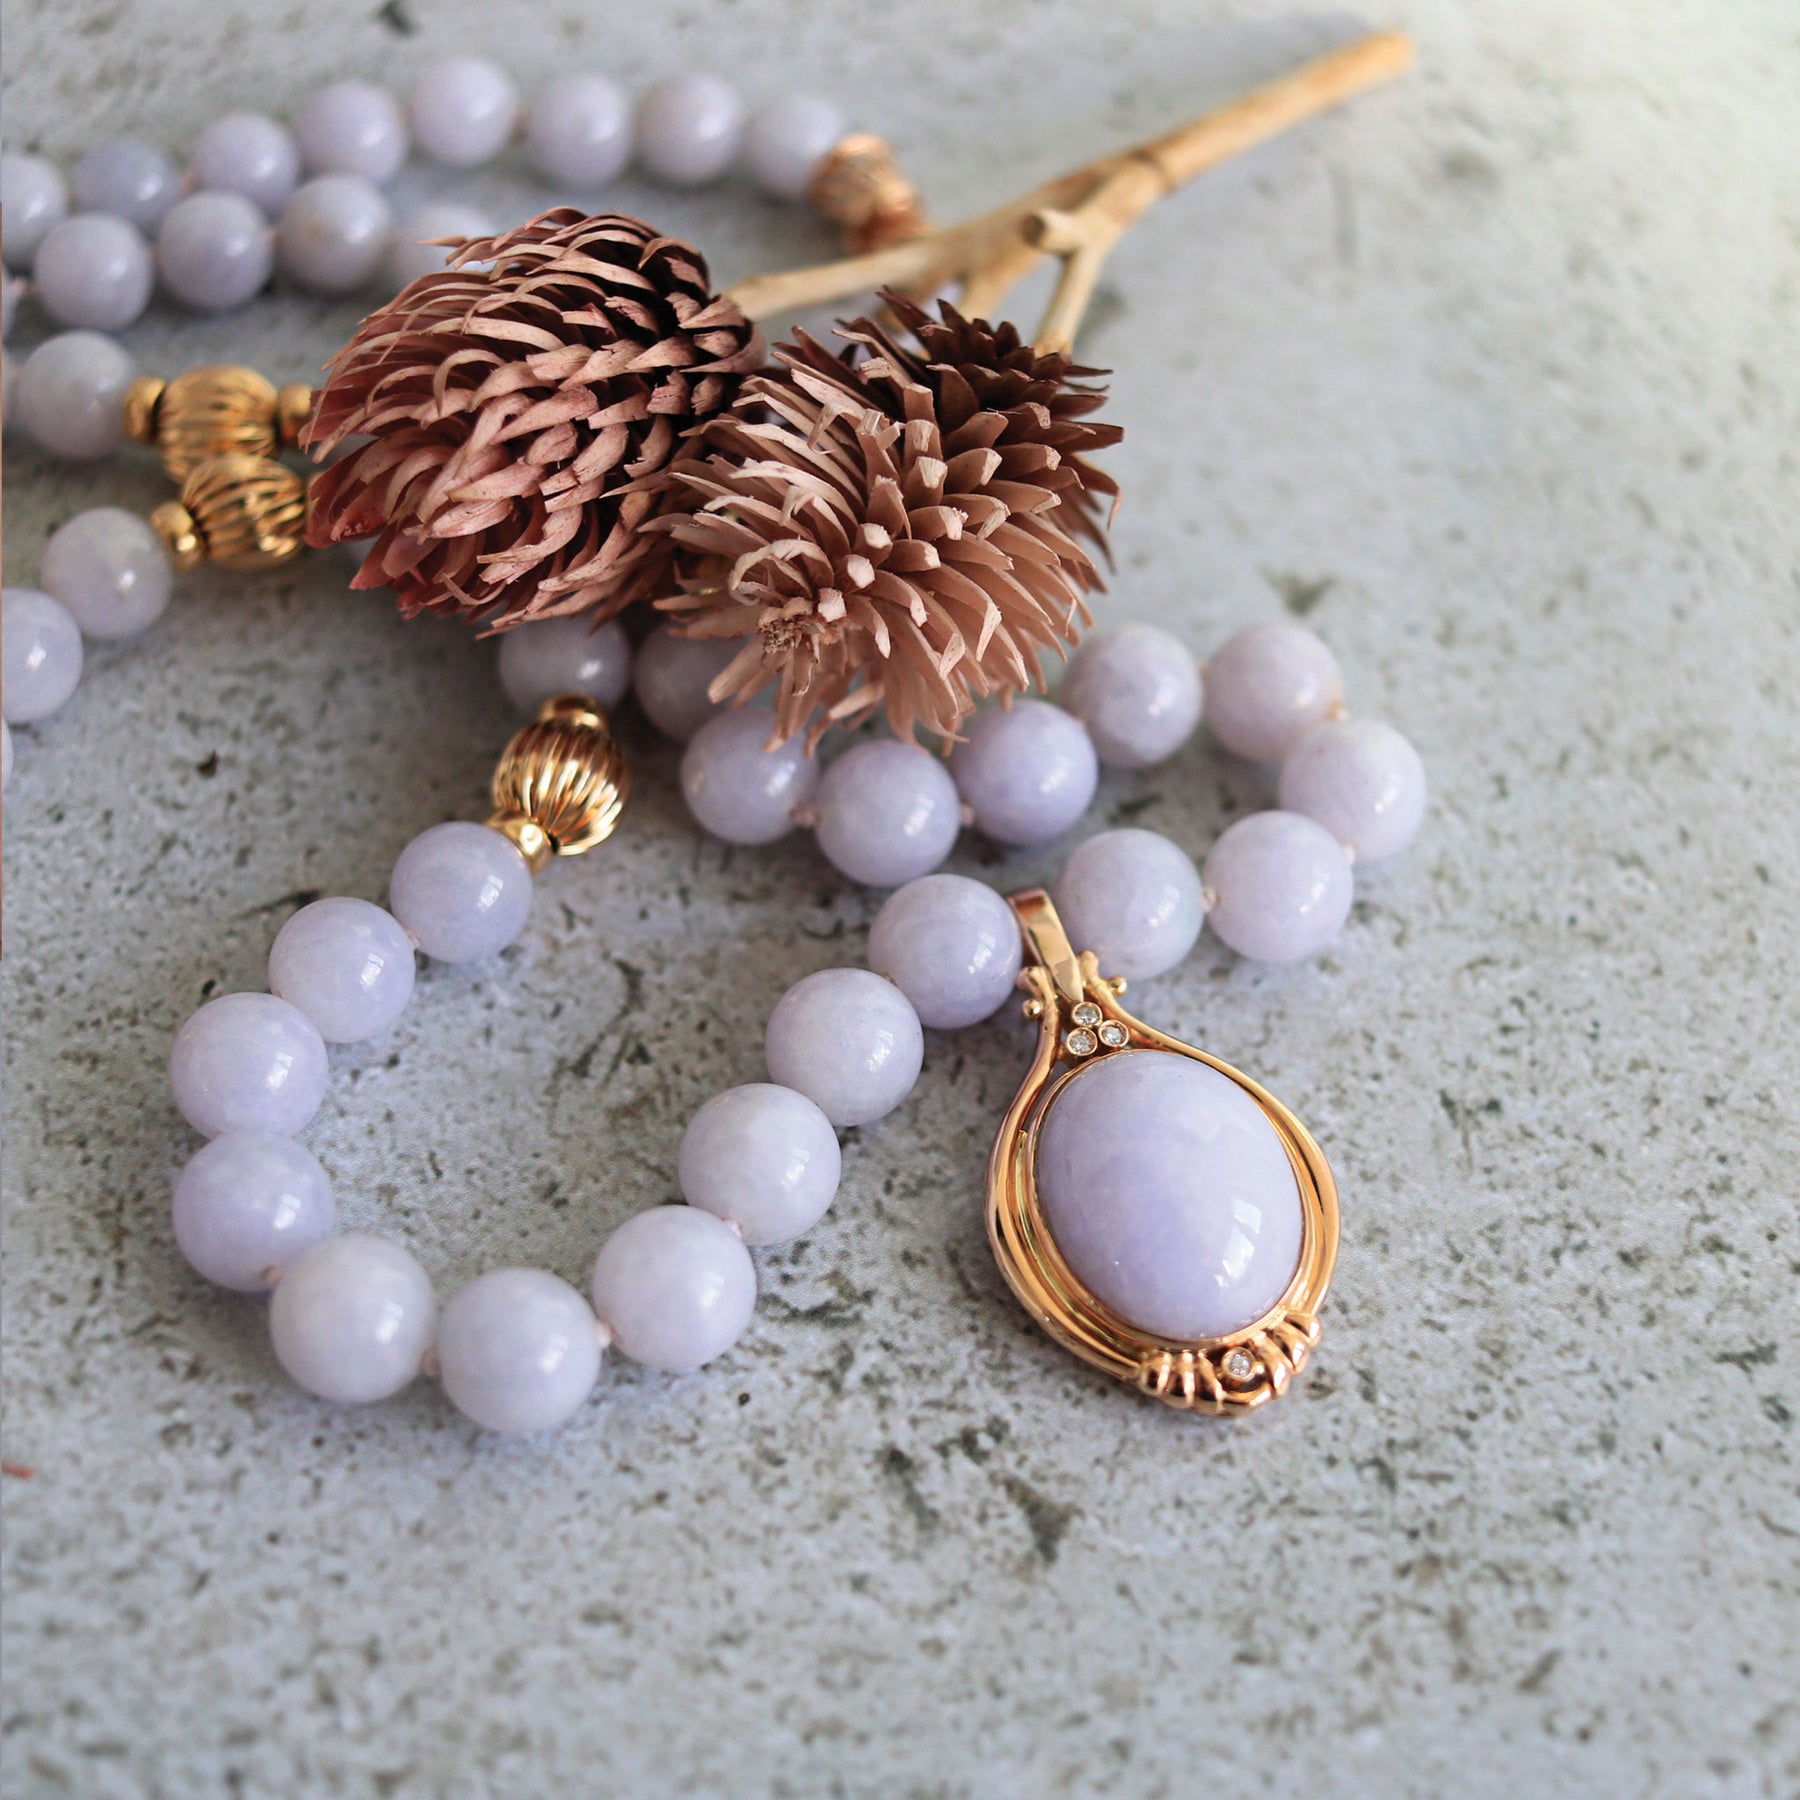 Cabochon Cut Lavender Jade and Diamond Enhancer Pendant & Necklace